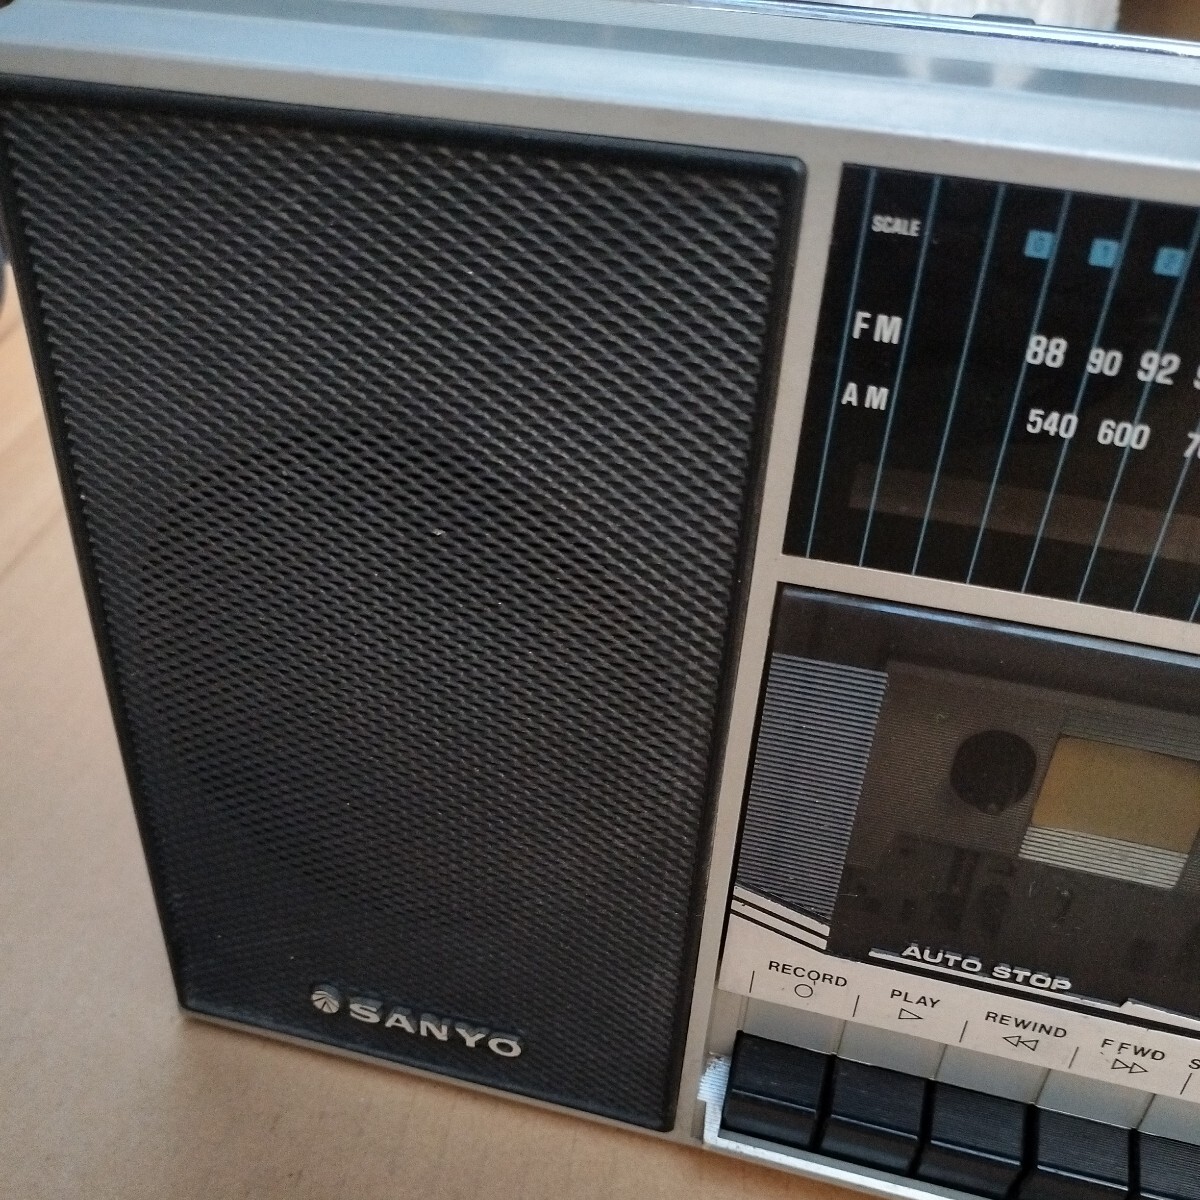  Showa Retro SANYO M2805F radio radio-cassette 60508-10